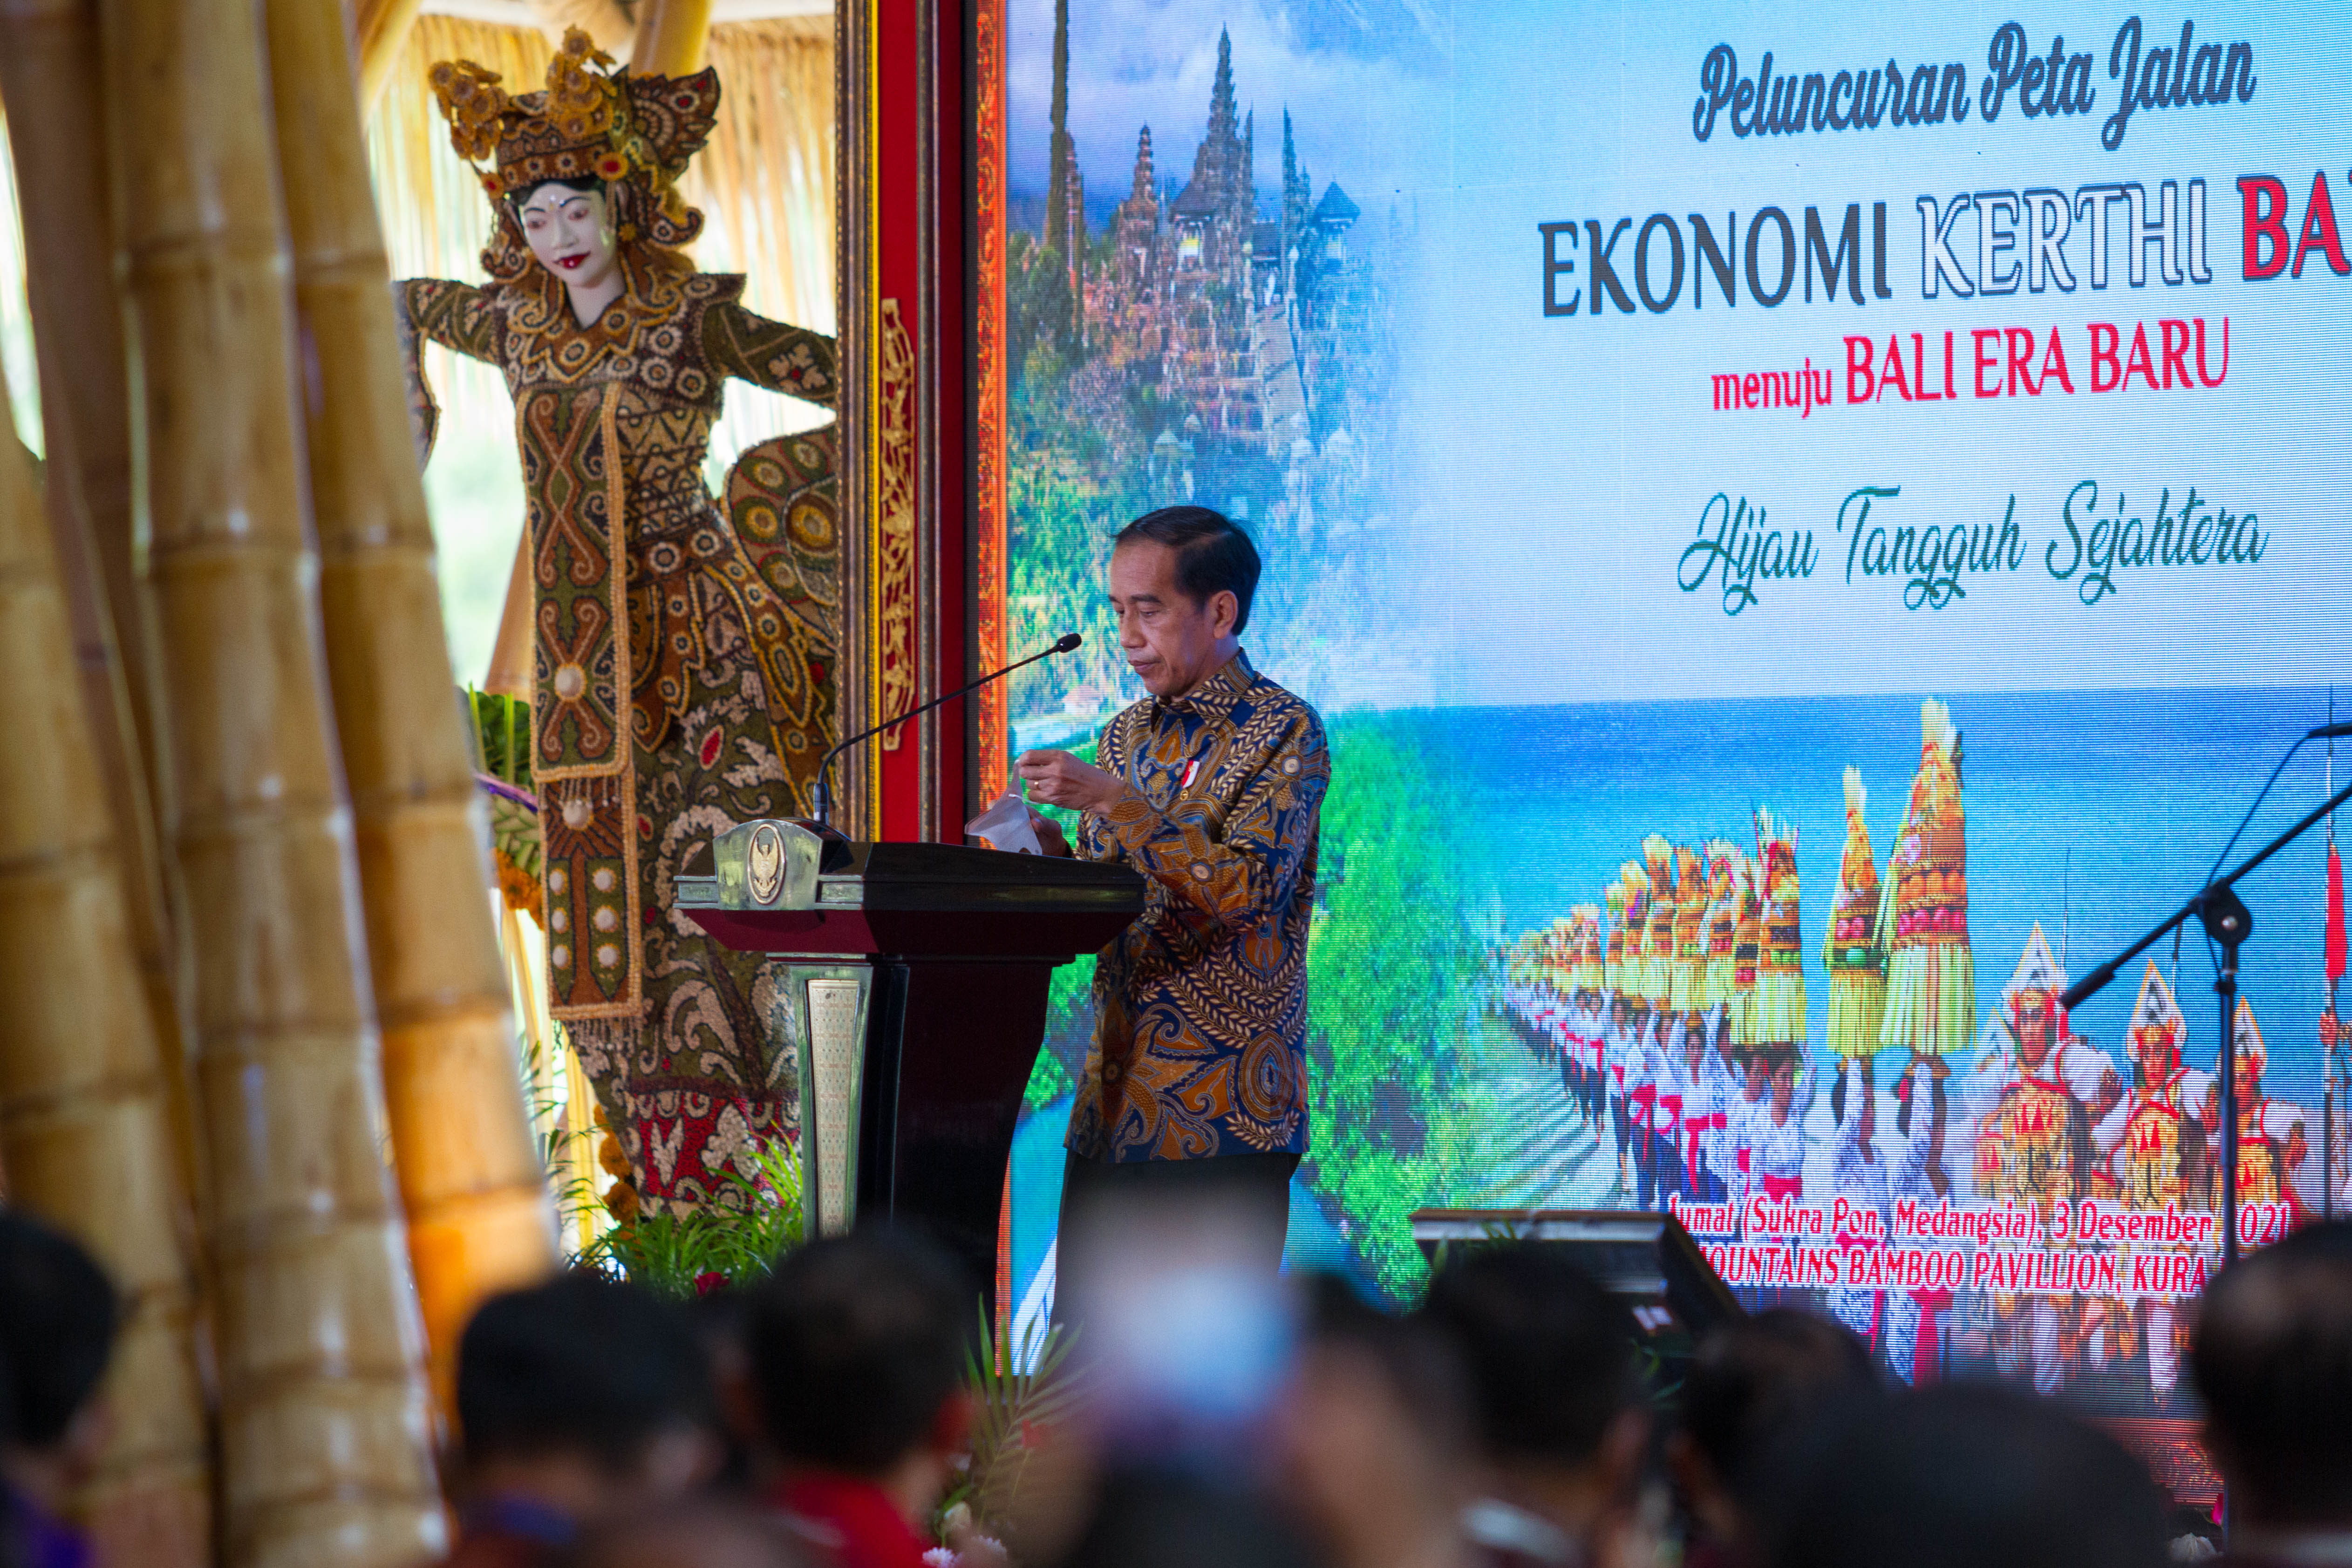 Presiden Jokowi Luncurkan Peta Jalan Ekonomi Kerthi Bali di Kura Kura Bali Three Mountains